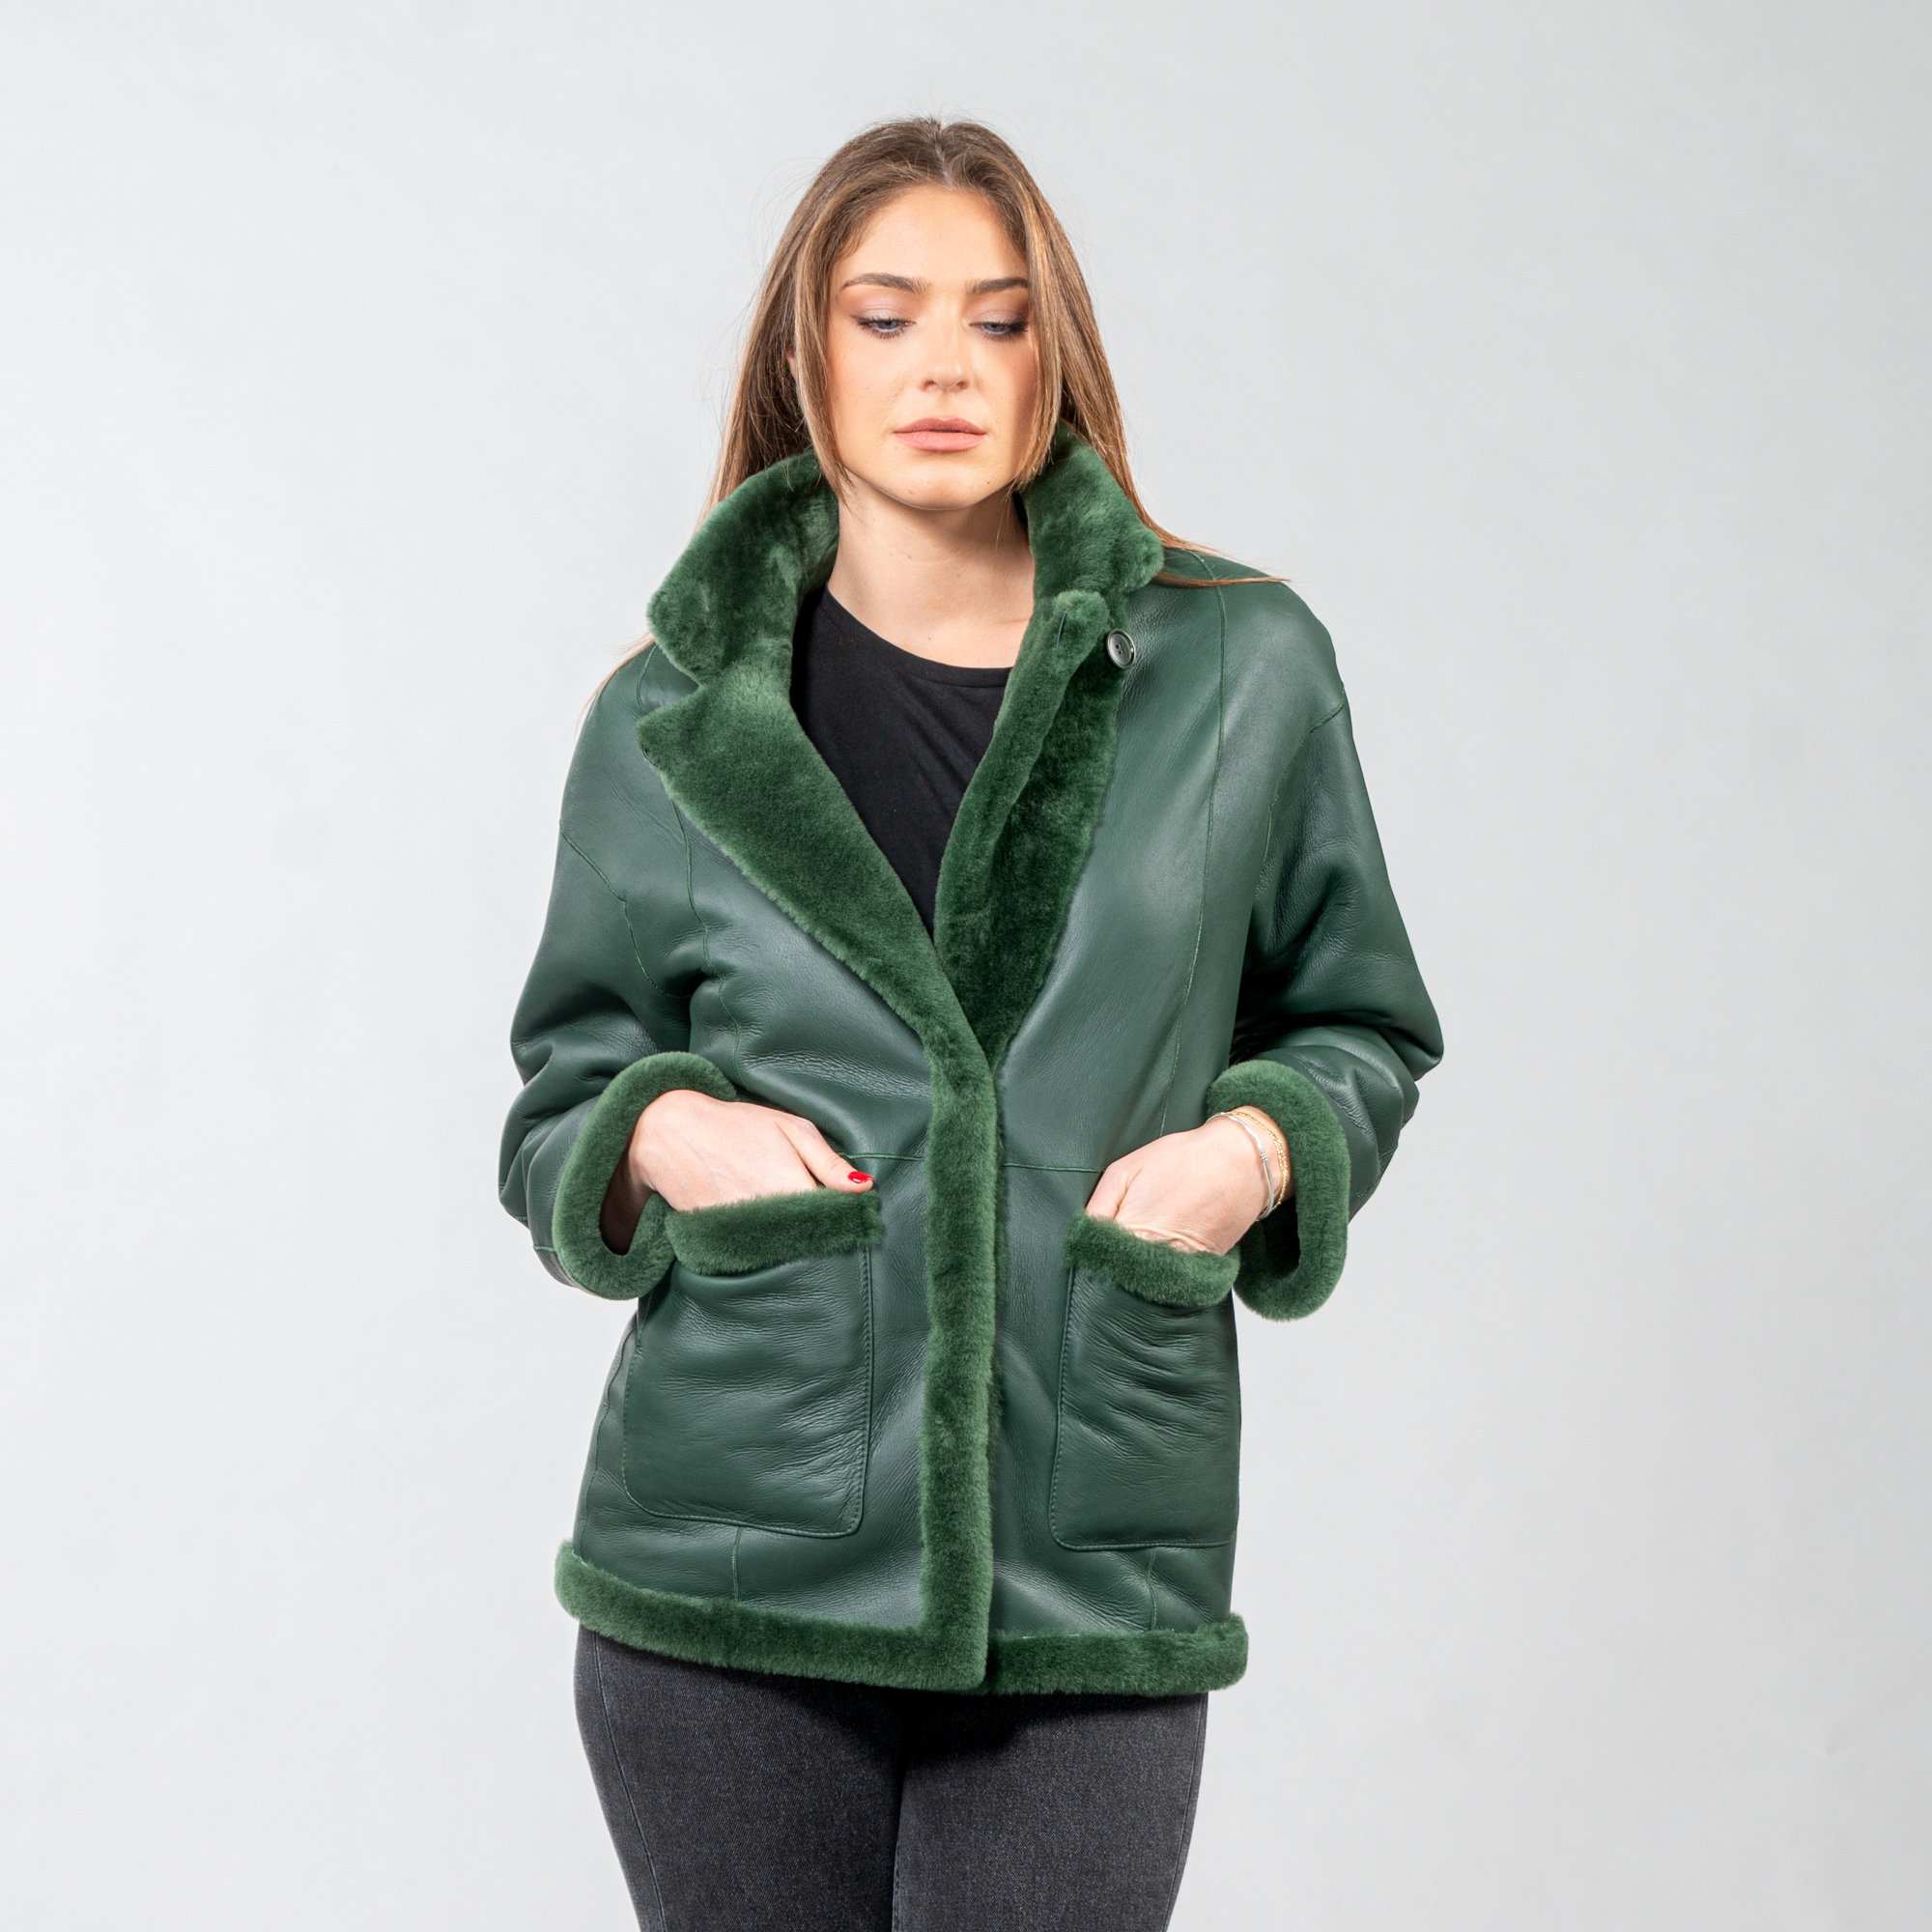 Reversible sheepskin jacket in green color